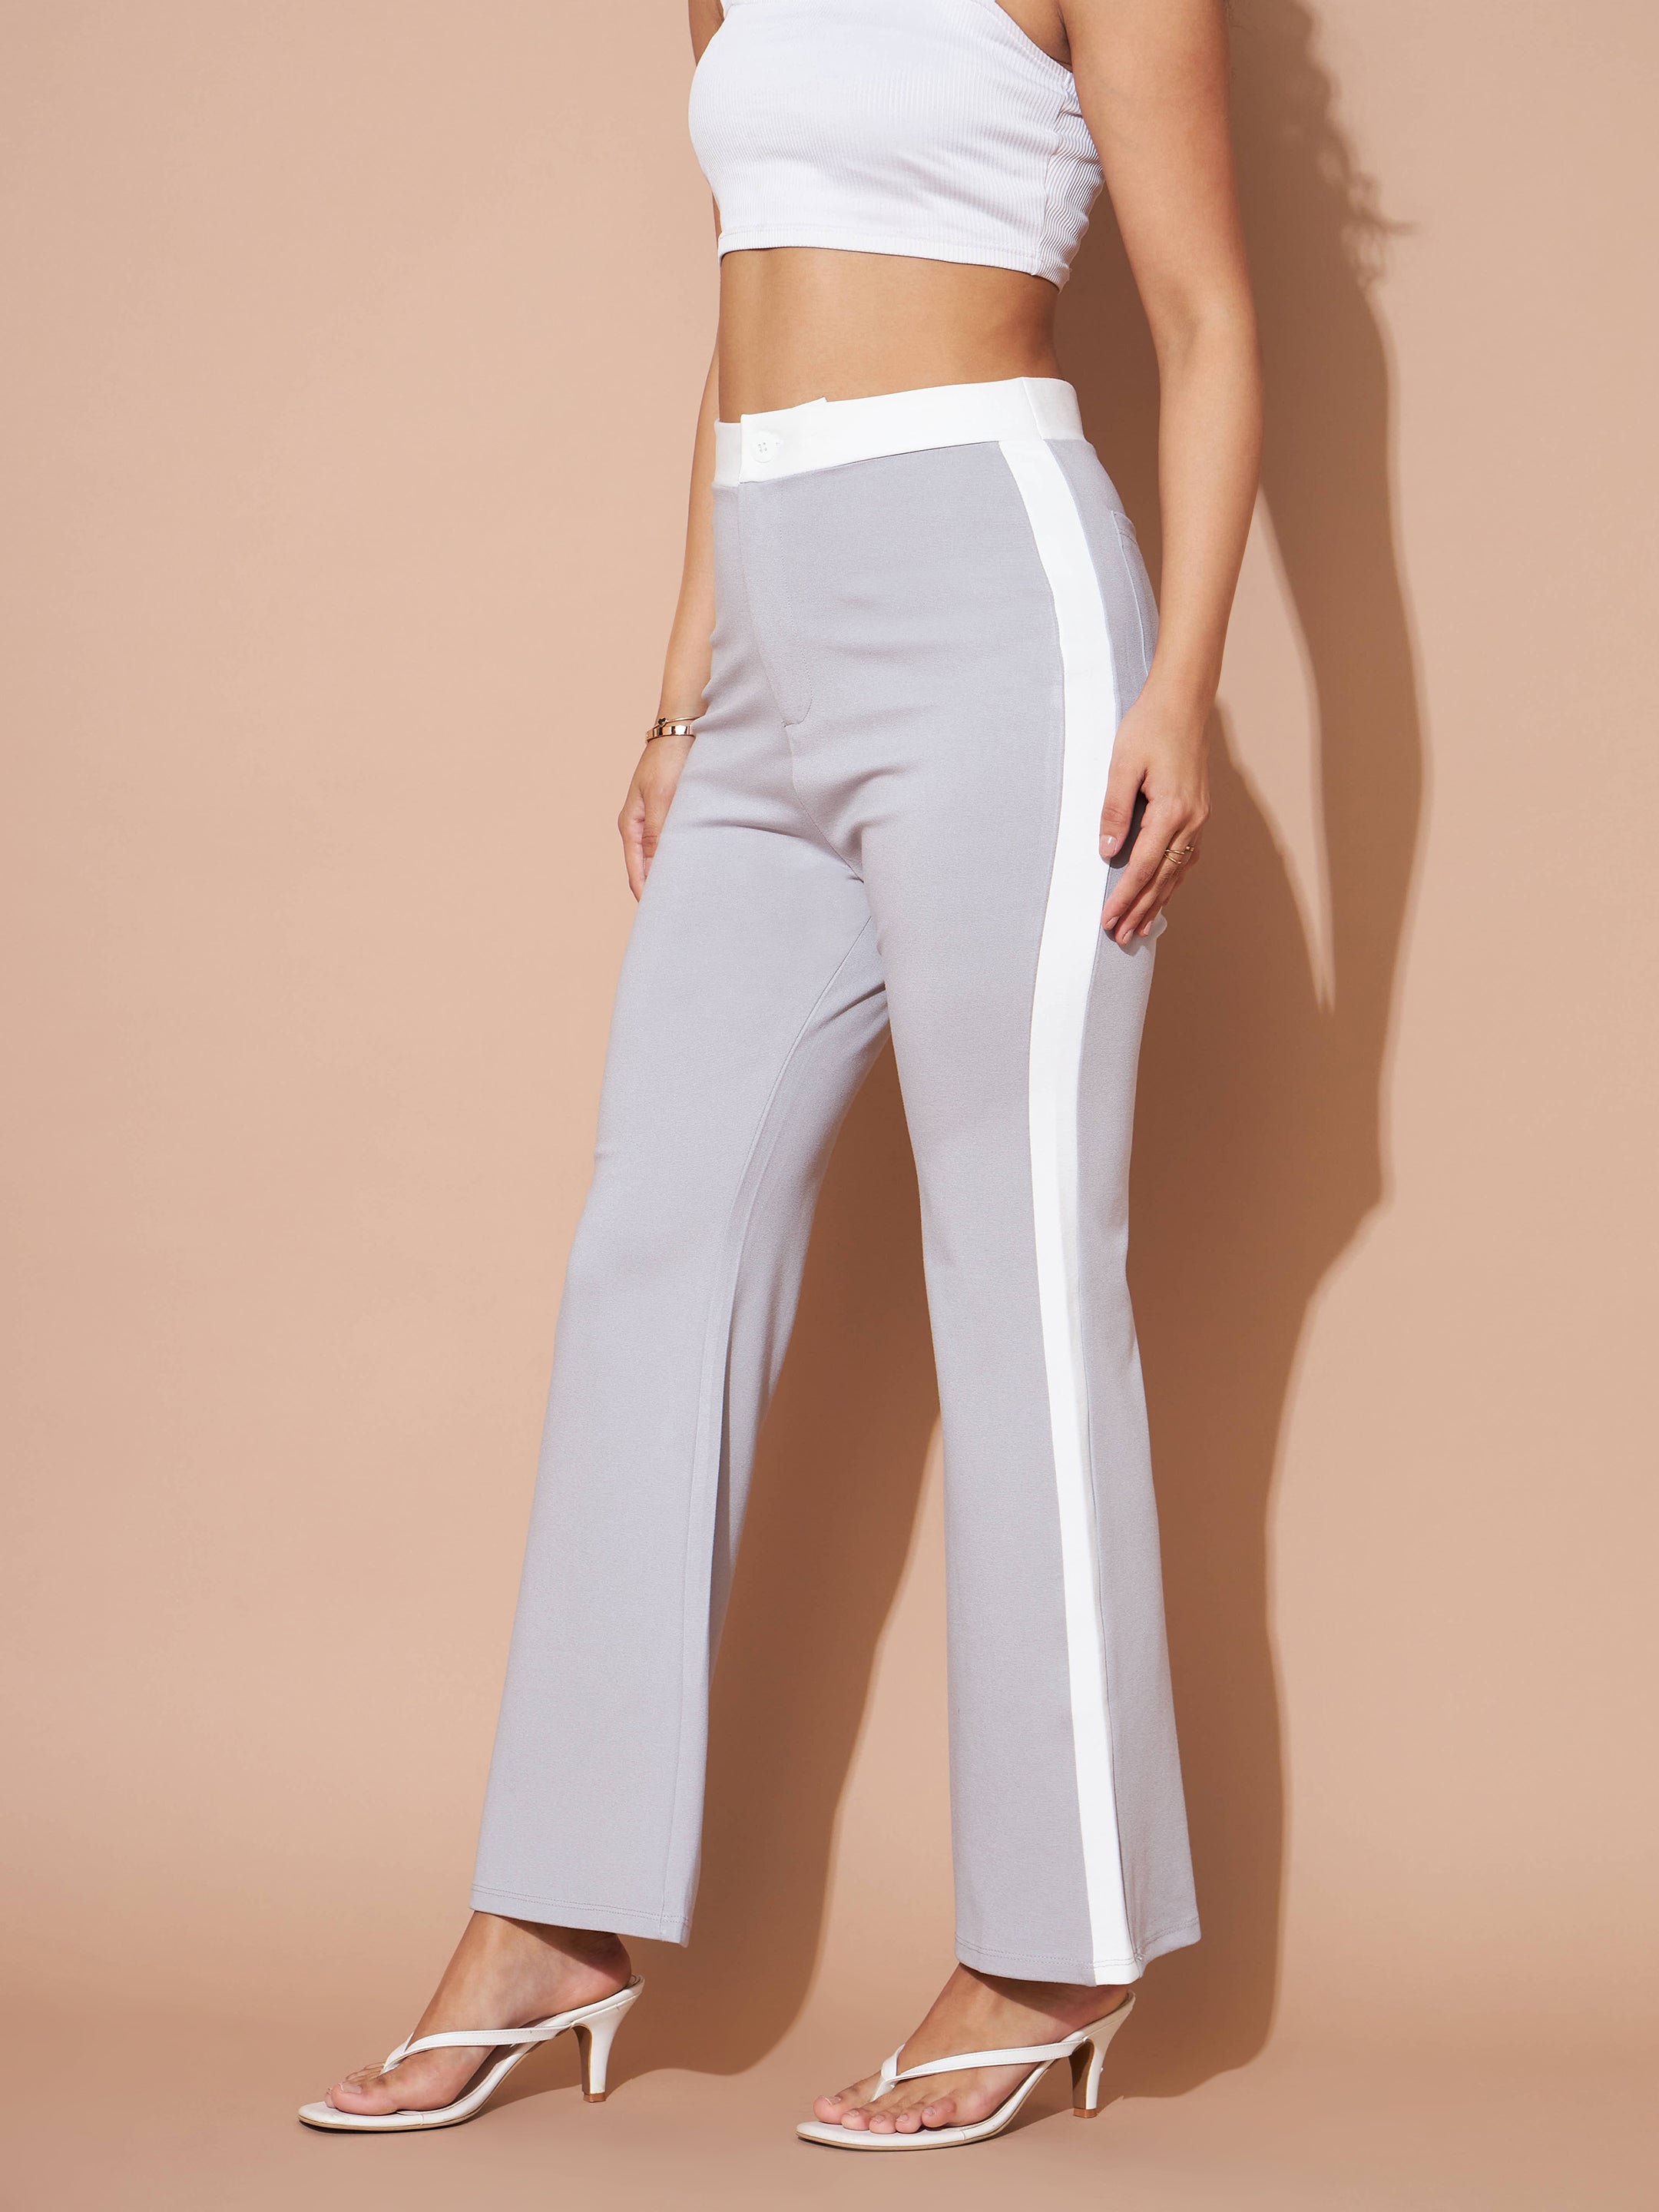 Women's Grey And White Colour Block Pants - Lyush